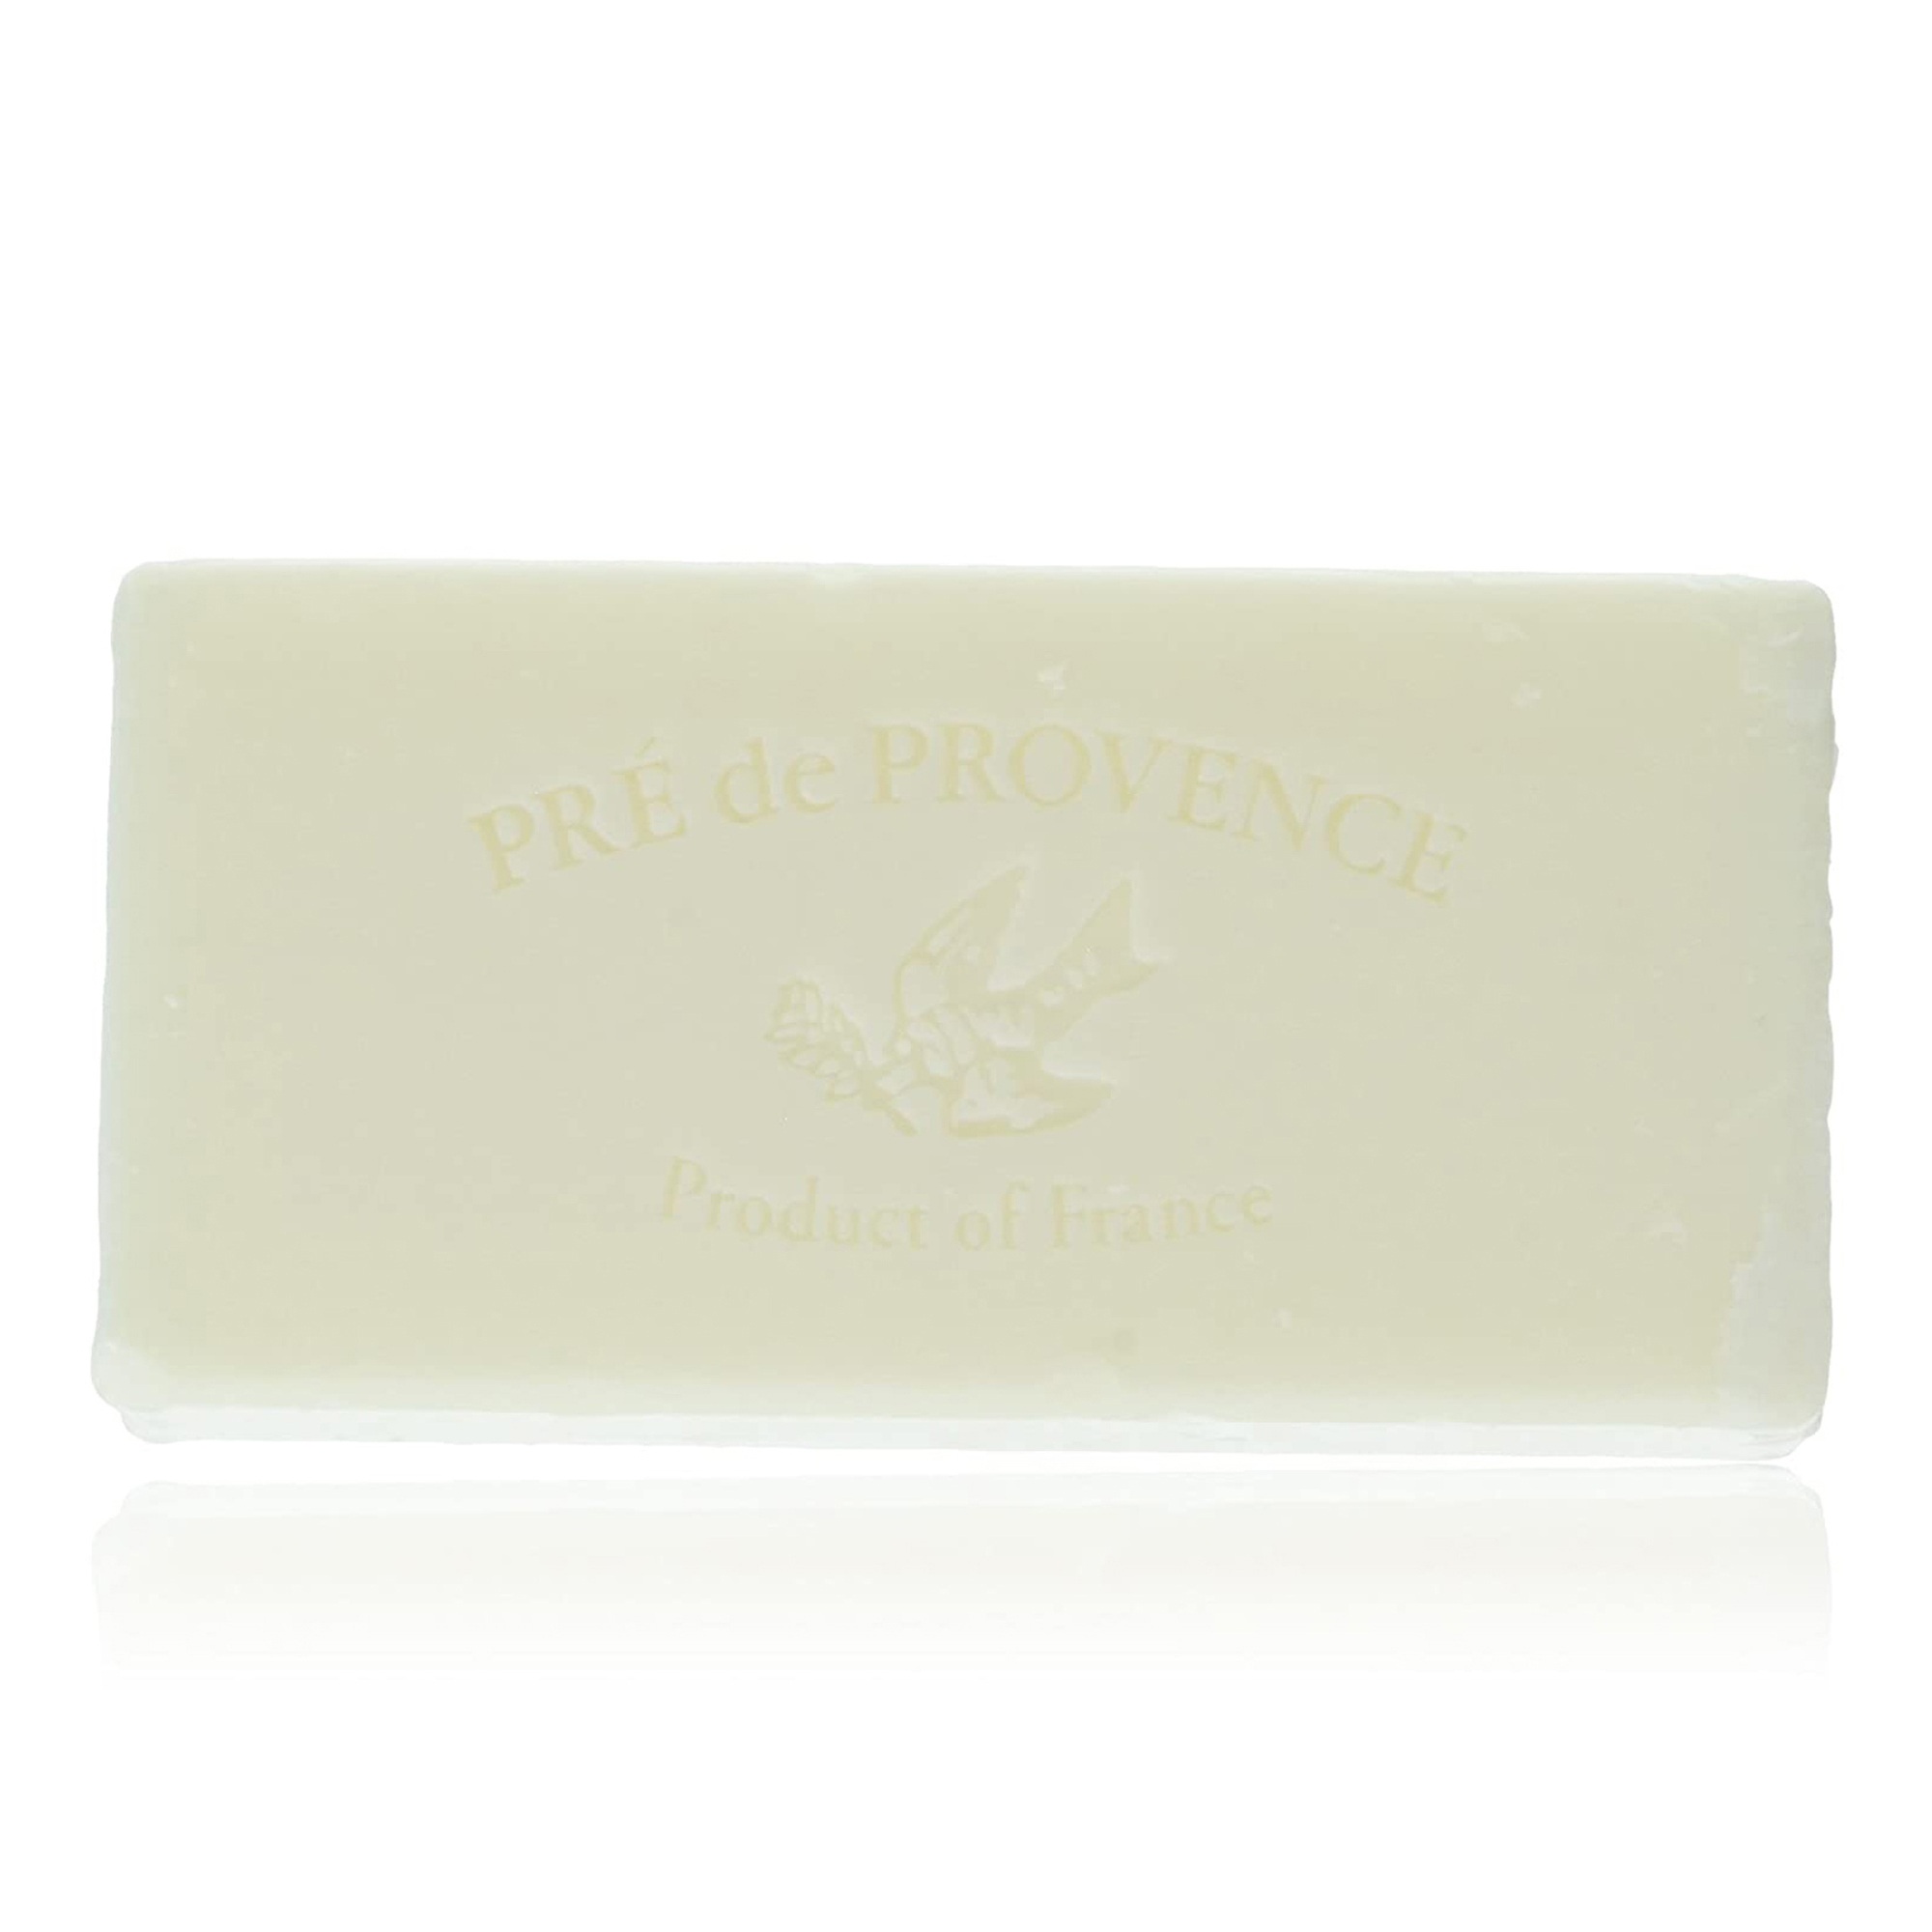 Design Imports Argan & Shea Butter Soap